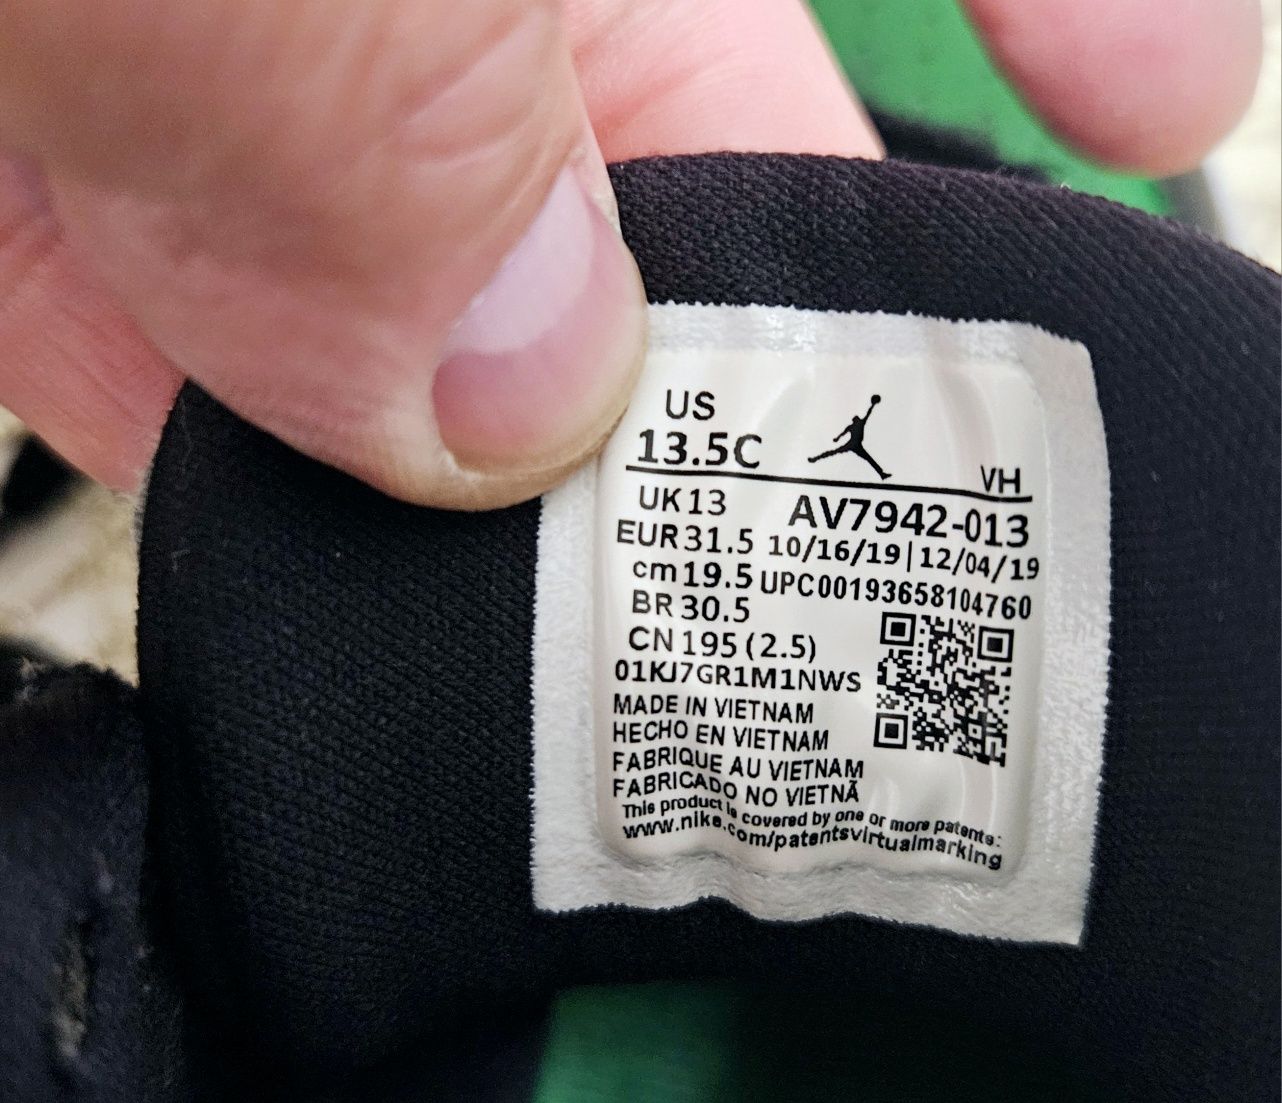 Adidasi Nike Air Jordan Acces originali 31 ghete baschet folosite